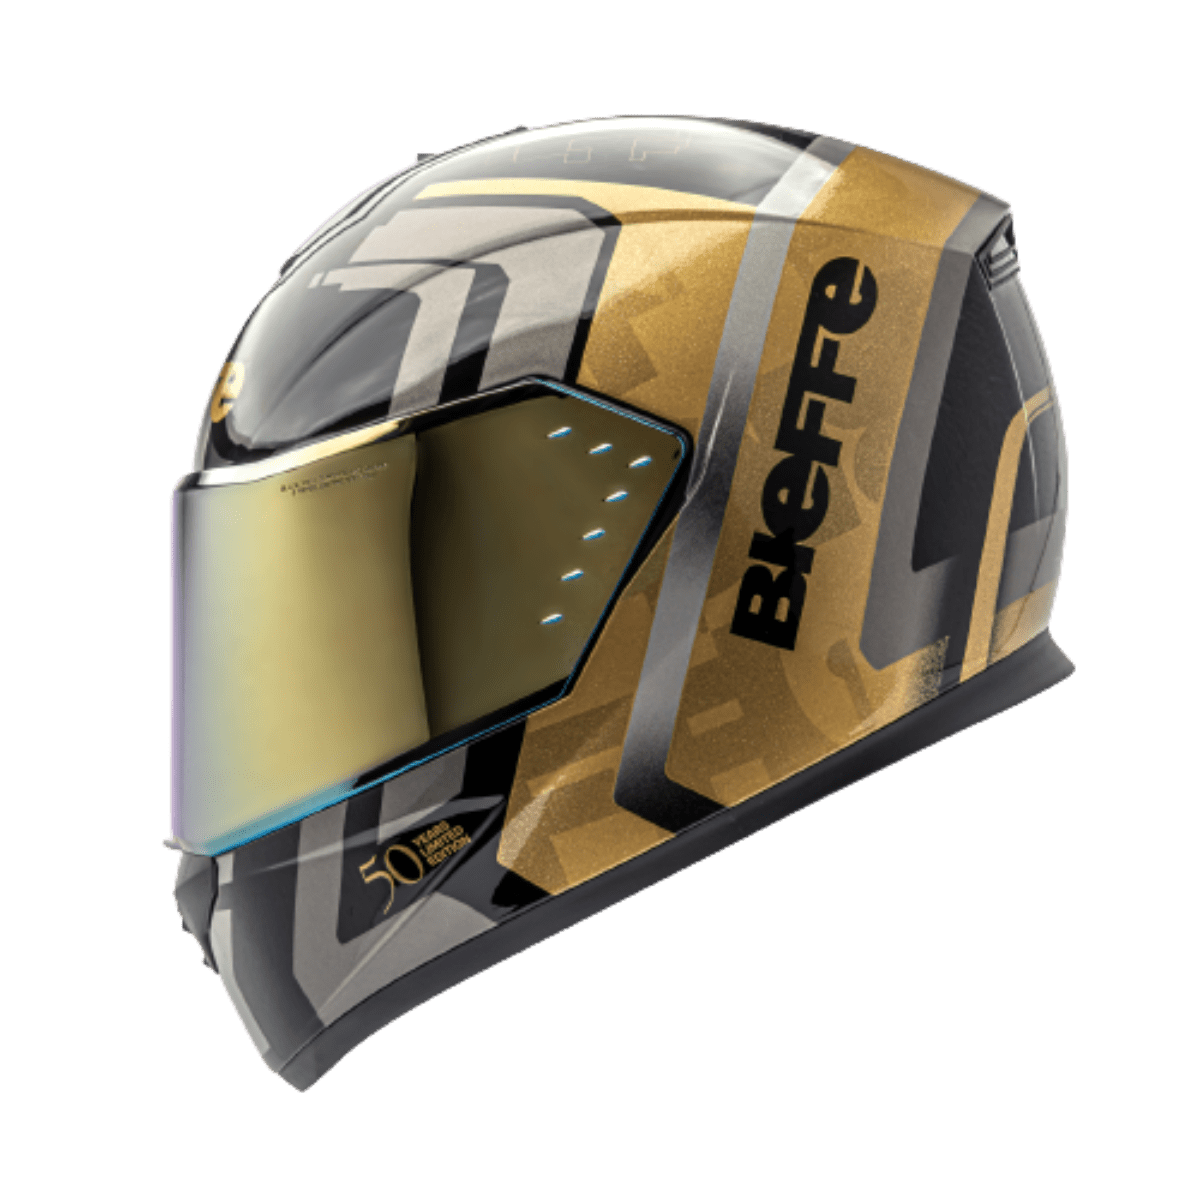 capacete bieffe b12 50 anos